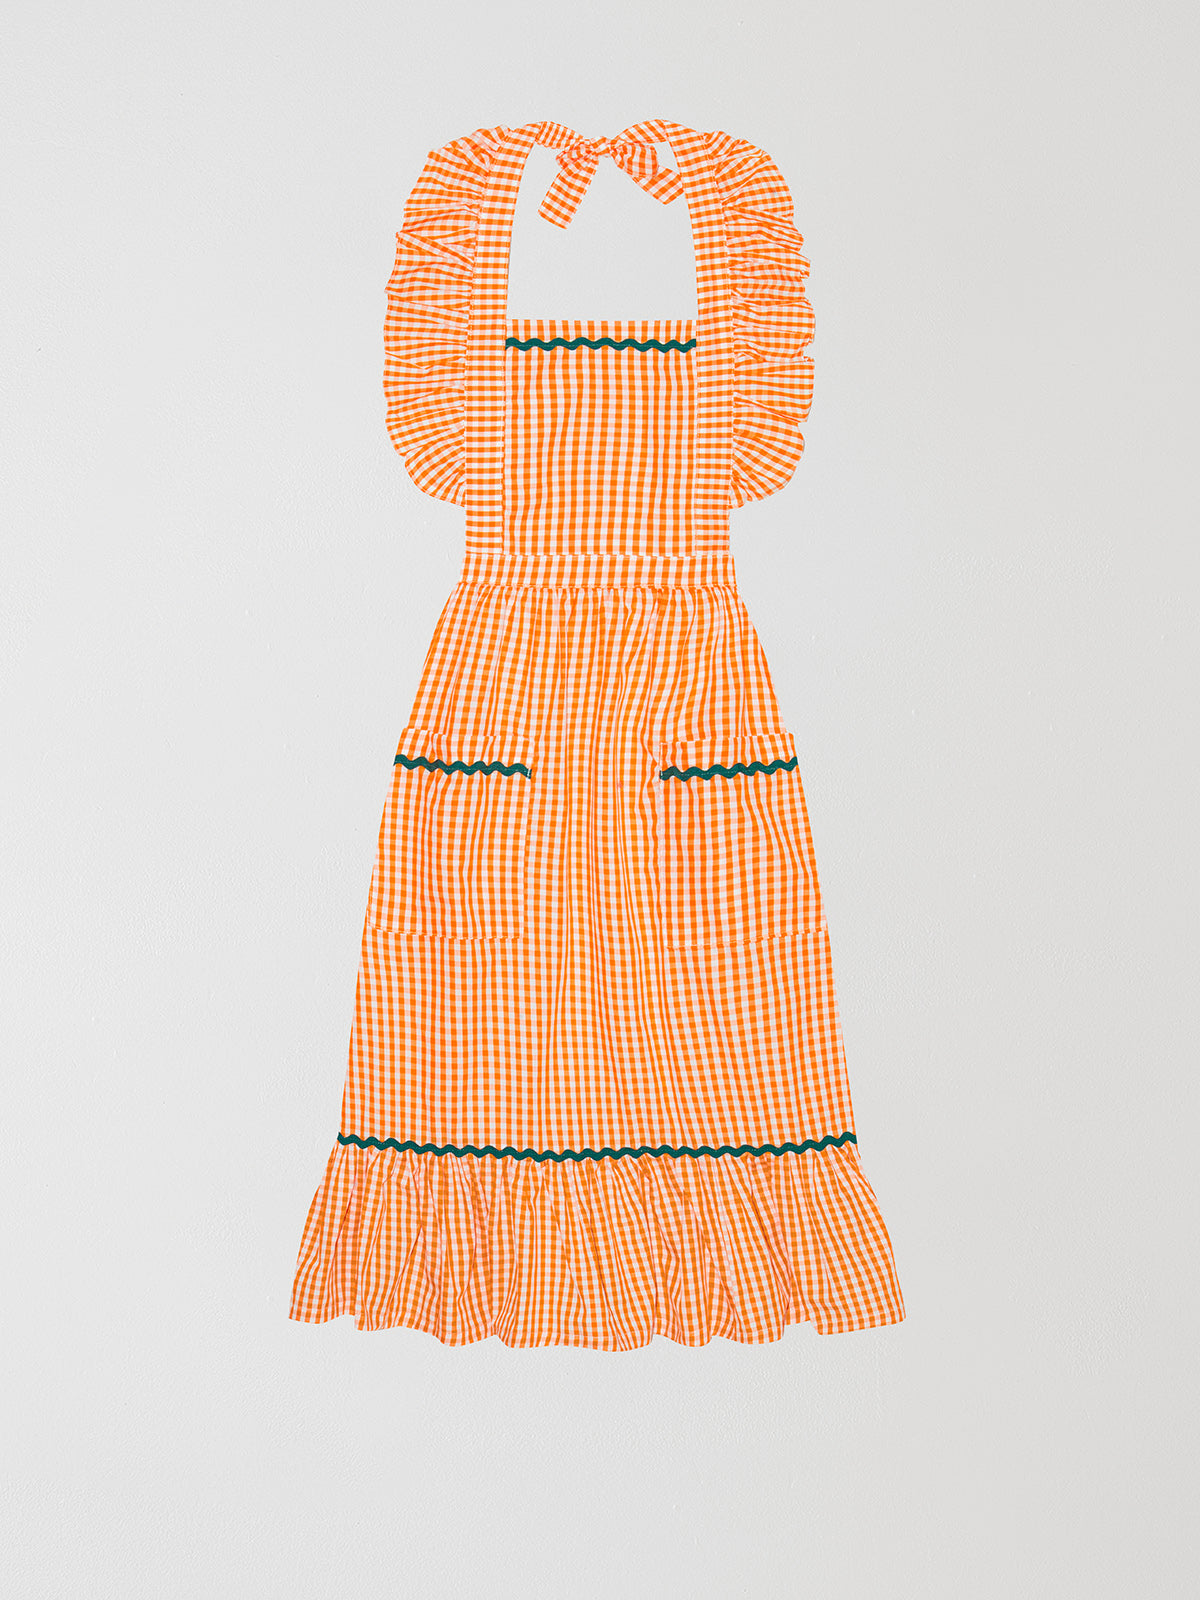 Cocinitas Apron Orange is an orange apron with ruffled straps and matching green onduline.